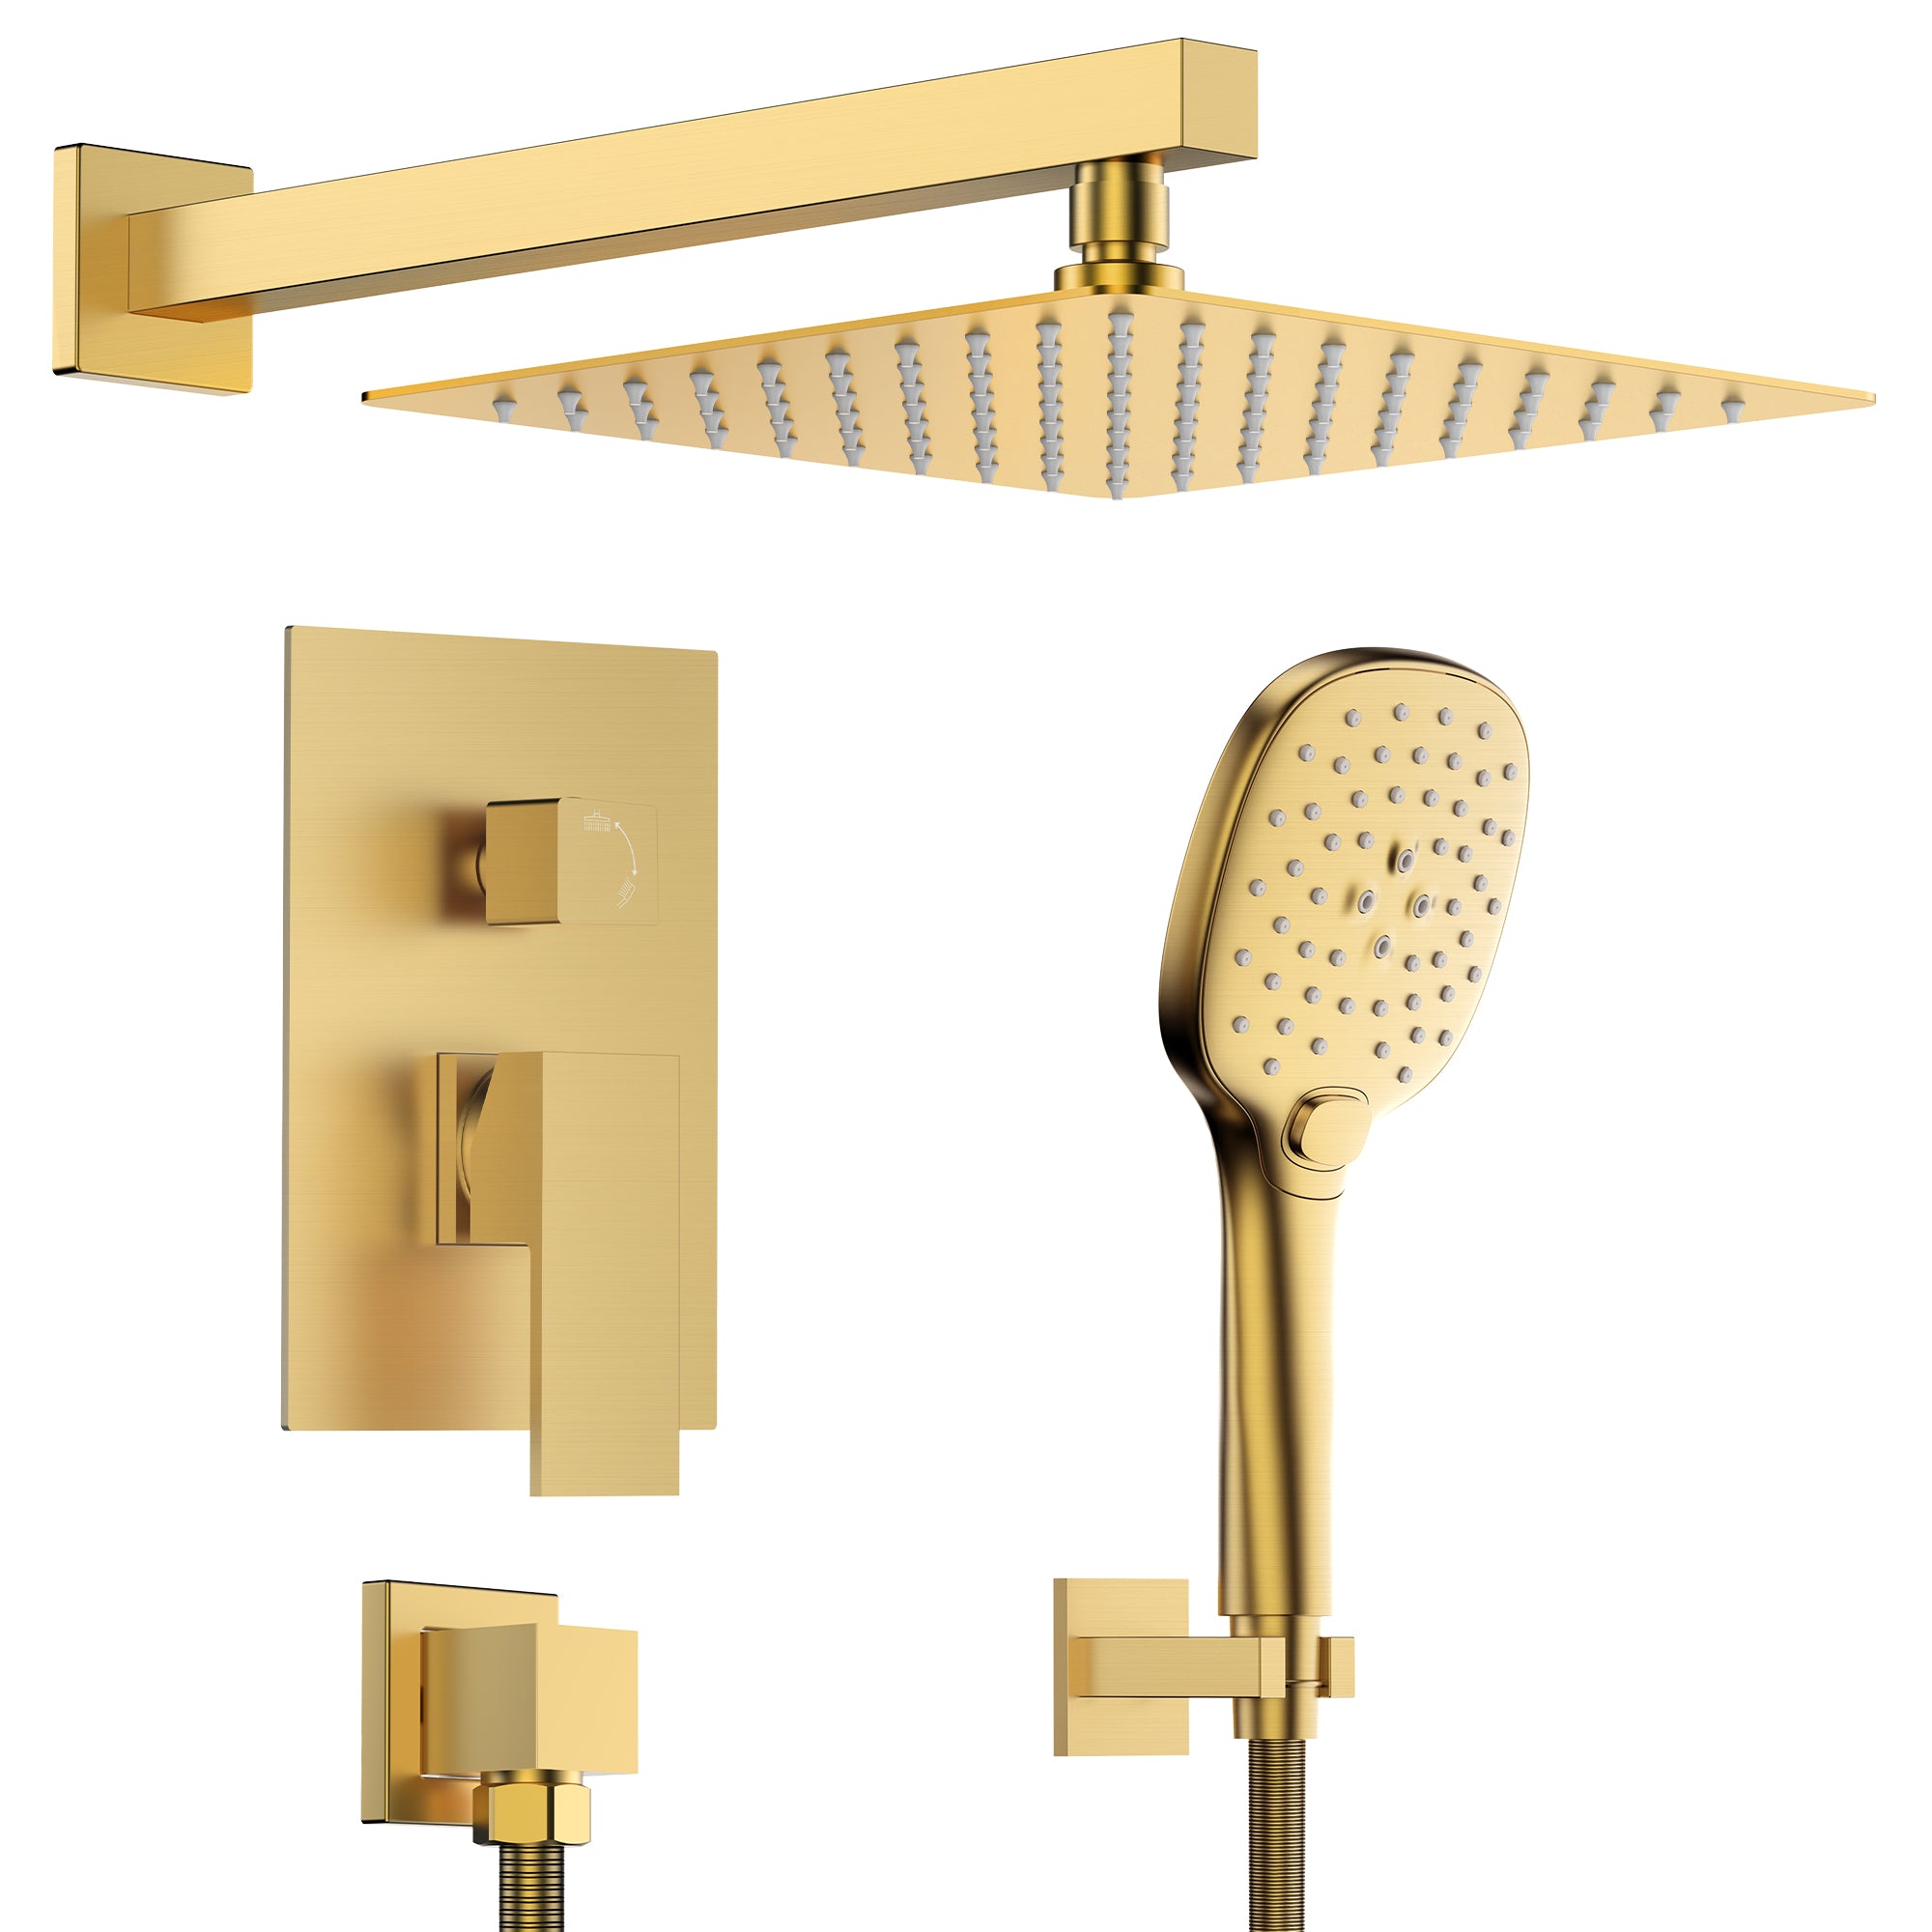 EVERSTEIN Brushed Gold Luxury Rain Shower Head System - 10" Rainfall & Handheld Spray, High-Pressure Bathroom Faucet Set